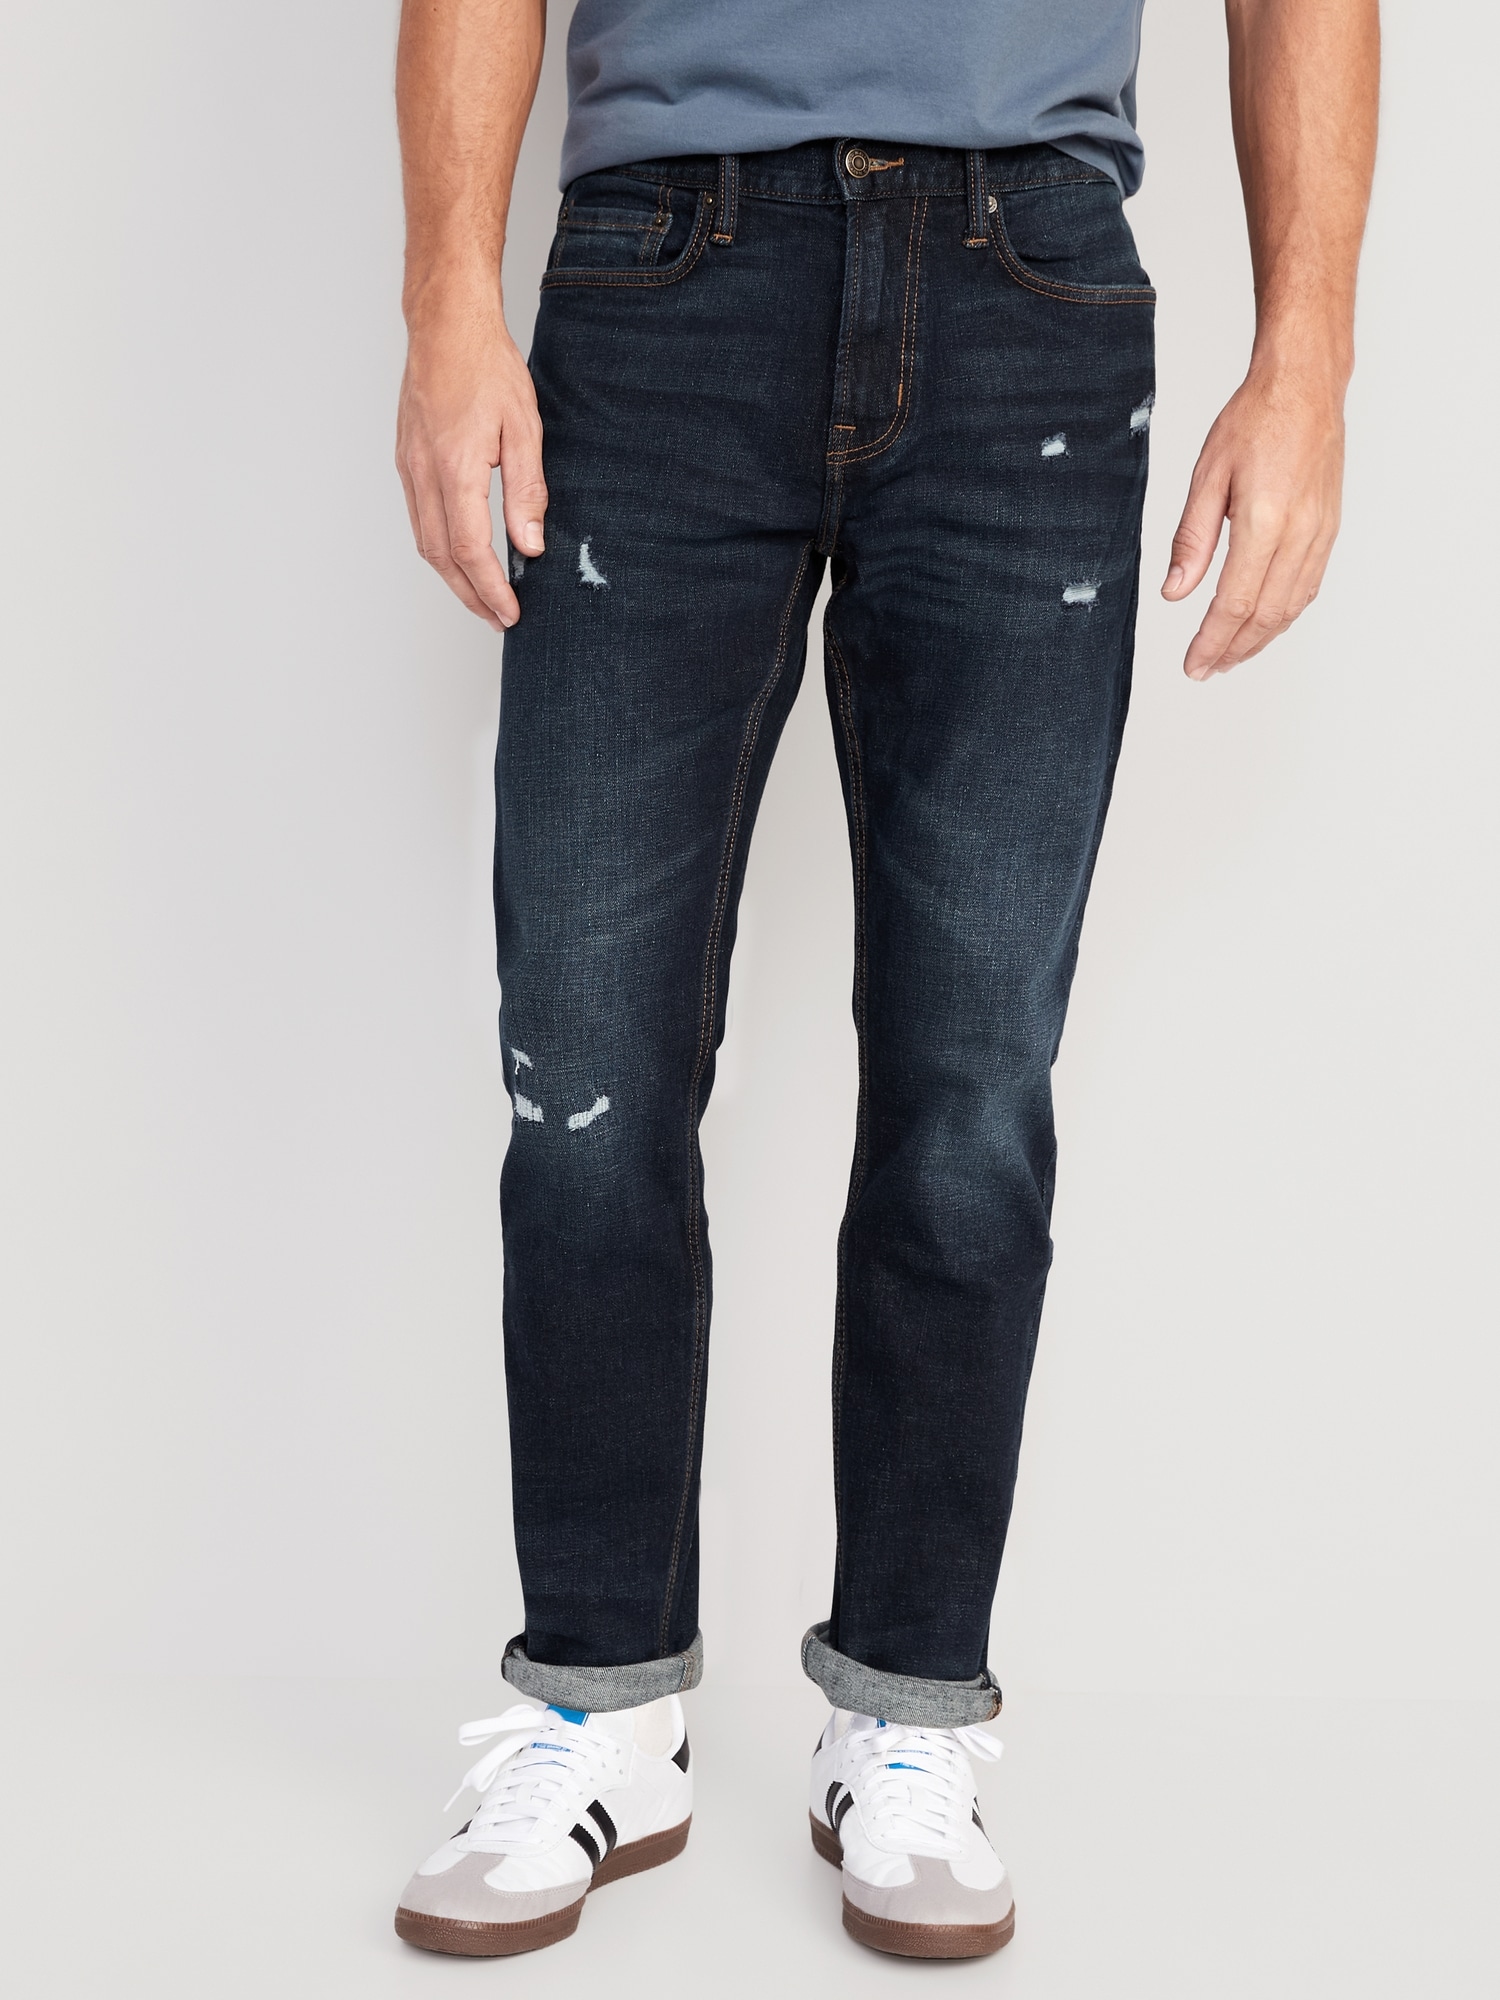 Old Navy Men's Skinny Built-in Flex Jeans - - Size 29W